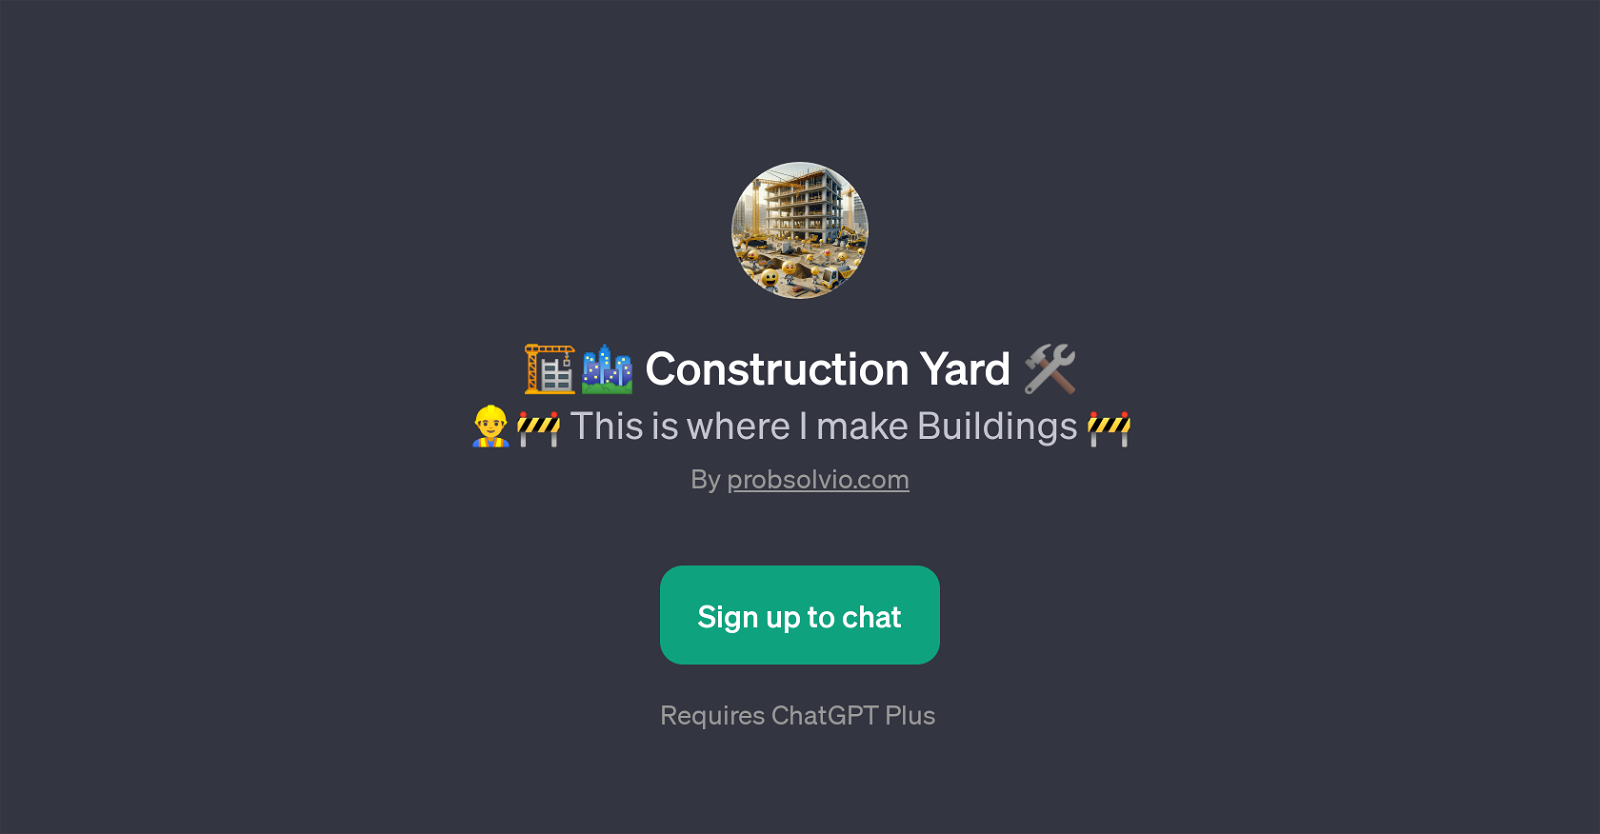 Construction Yard website